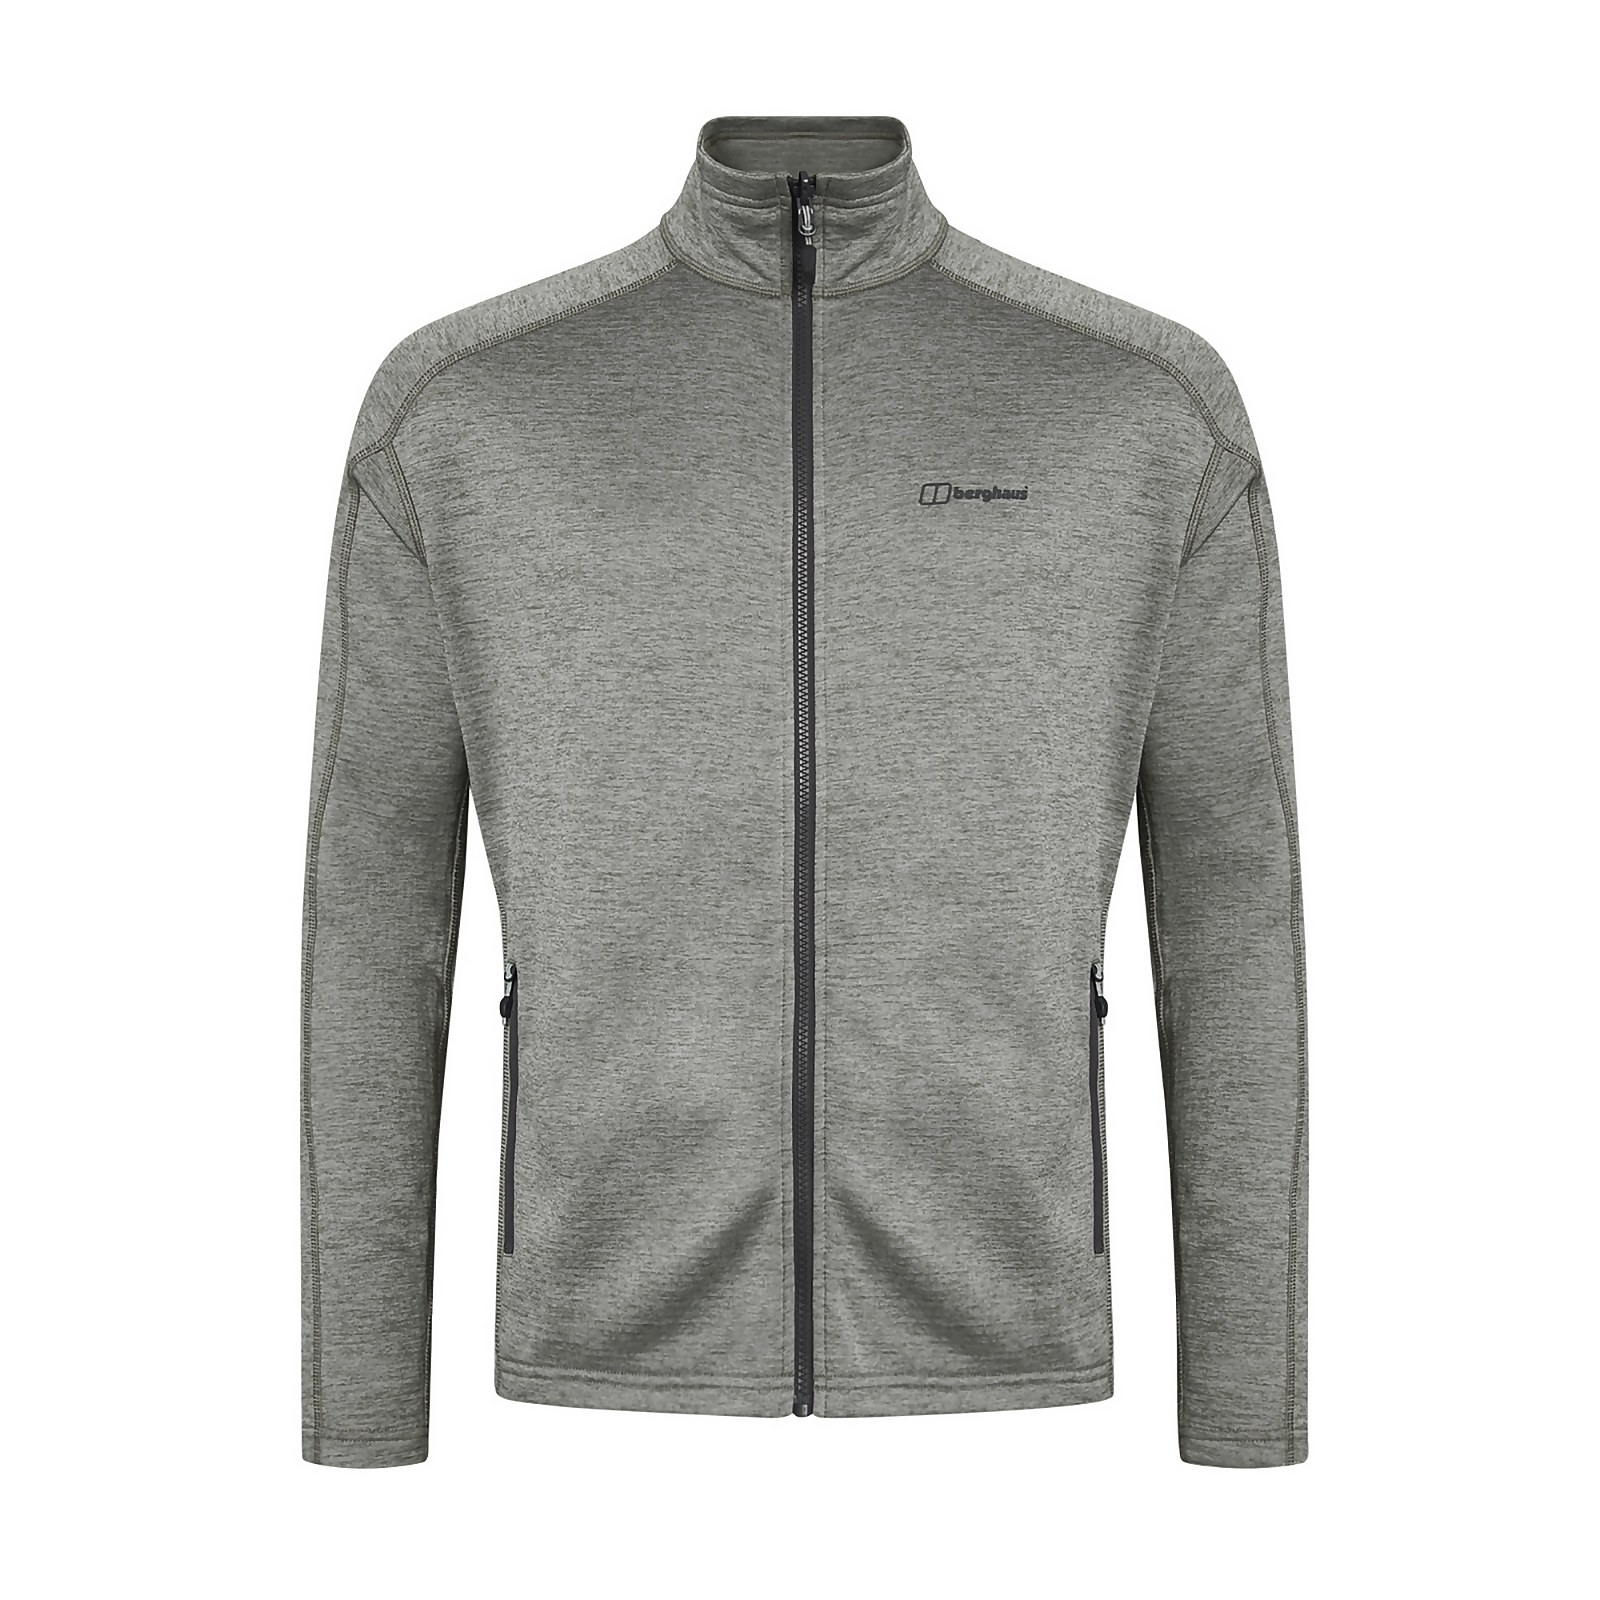 Berghaus Mens Spitzer Fleece Jacket - Grey - S